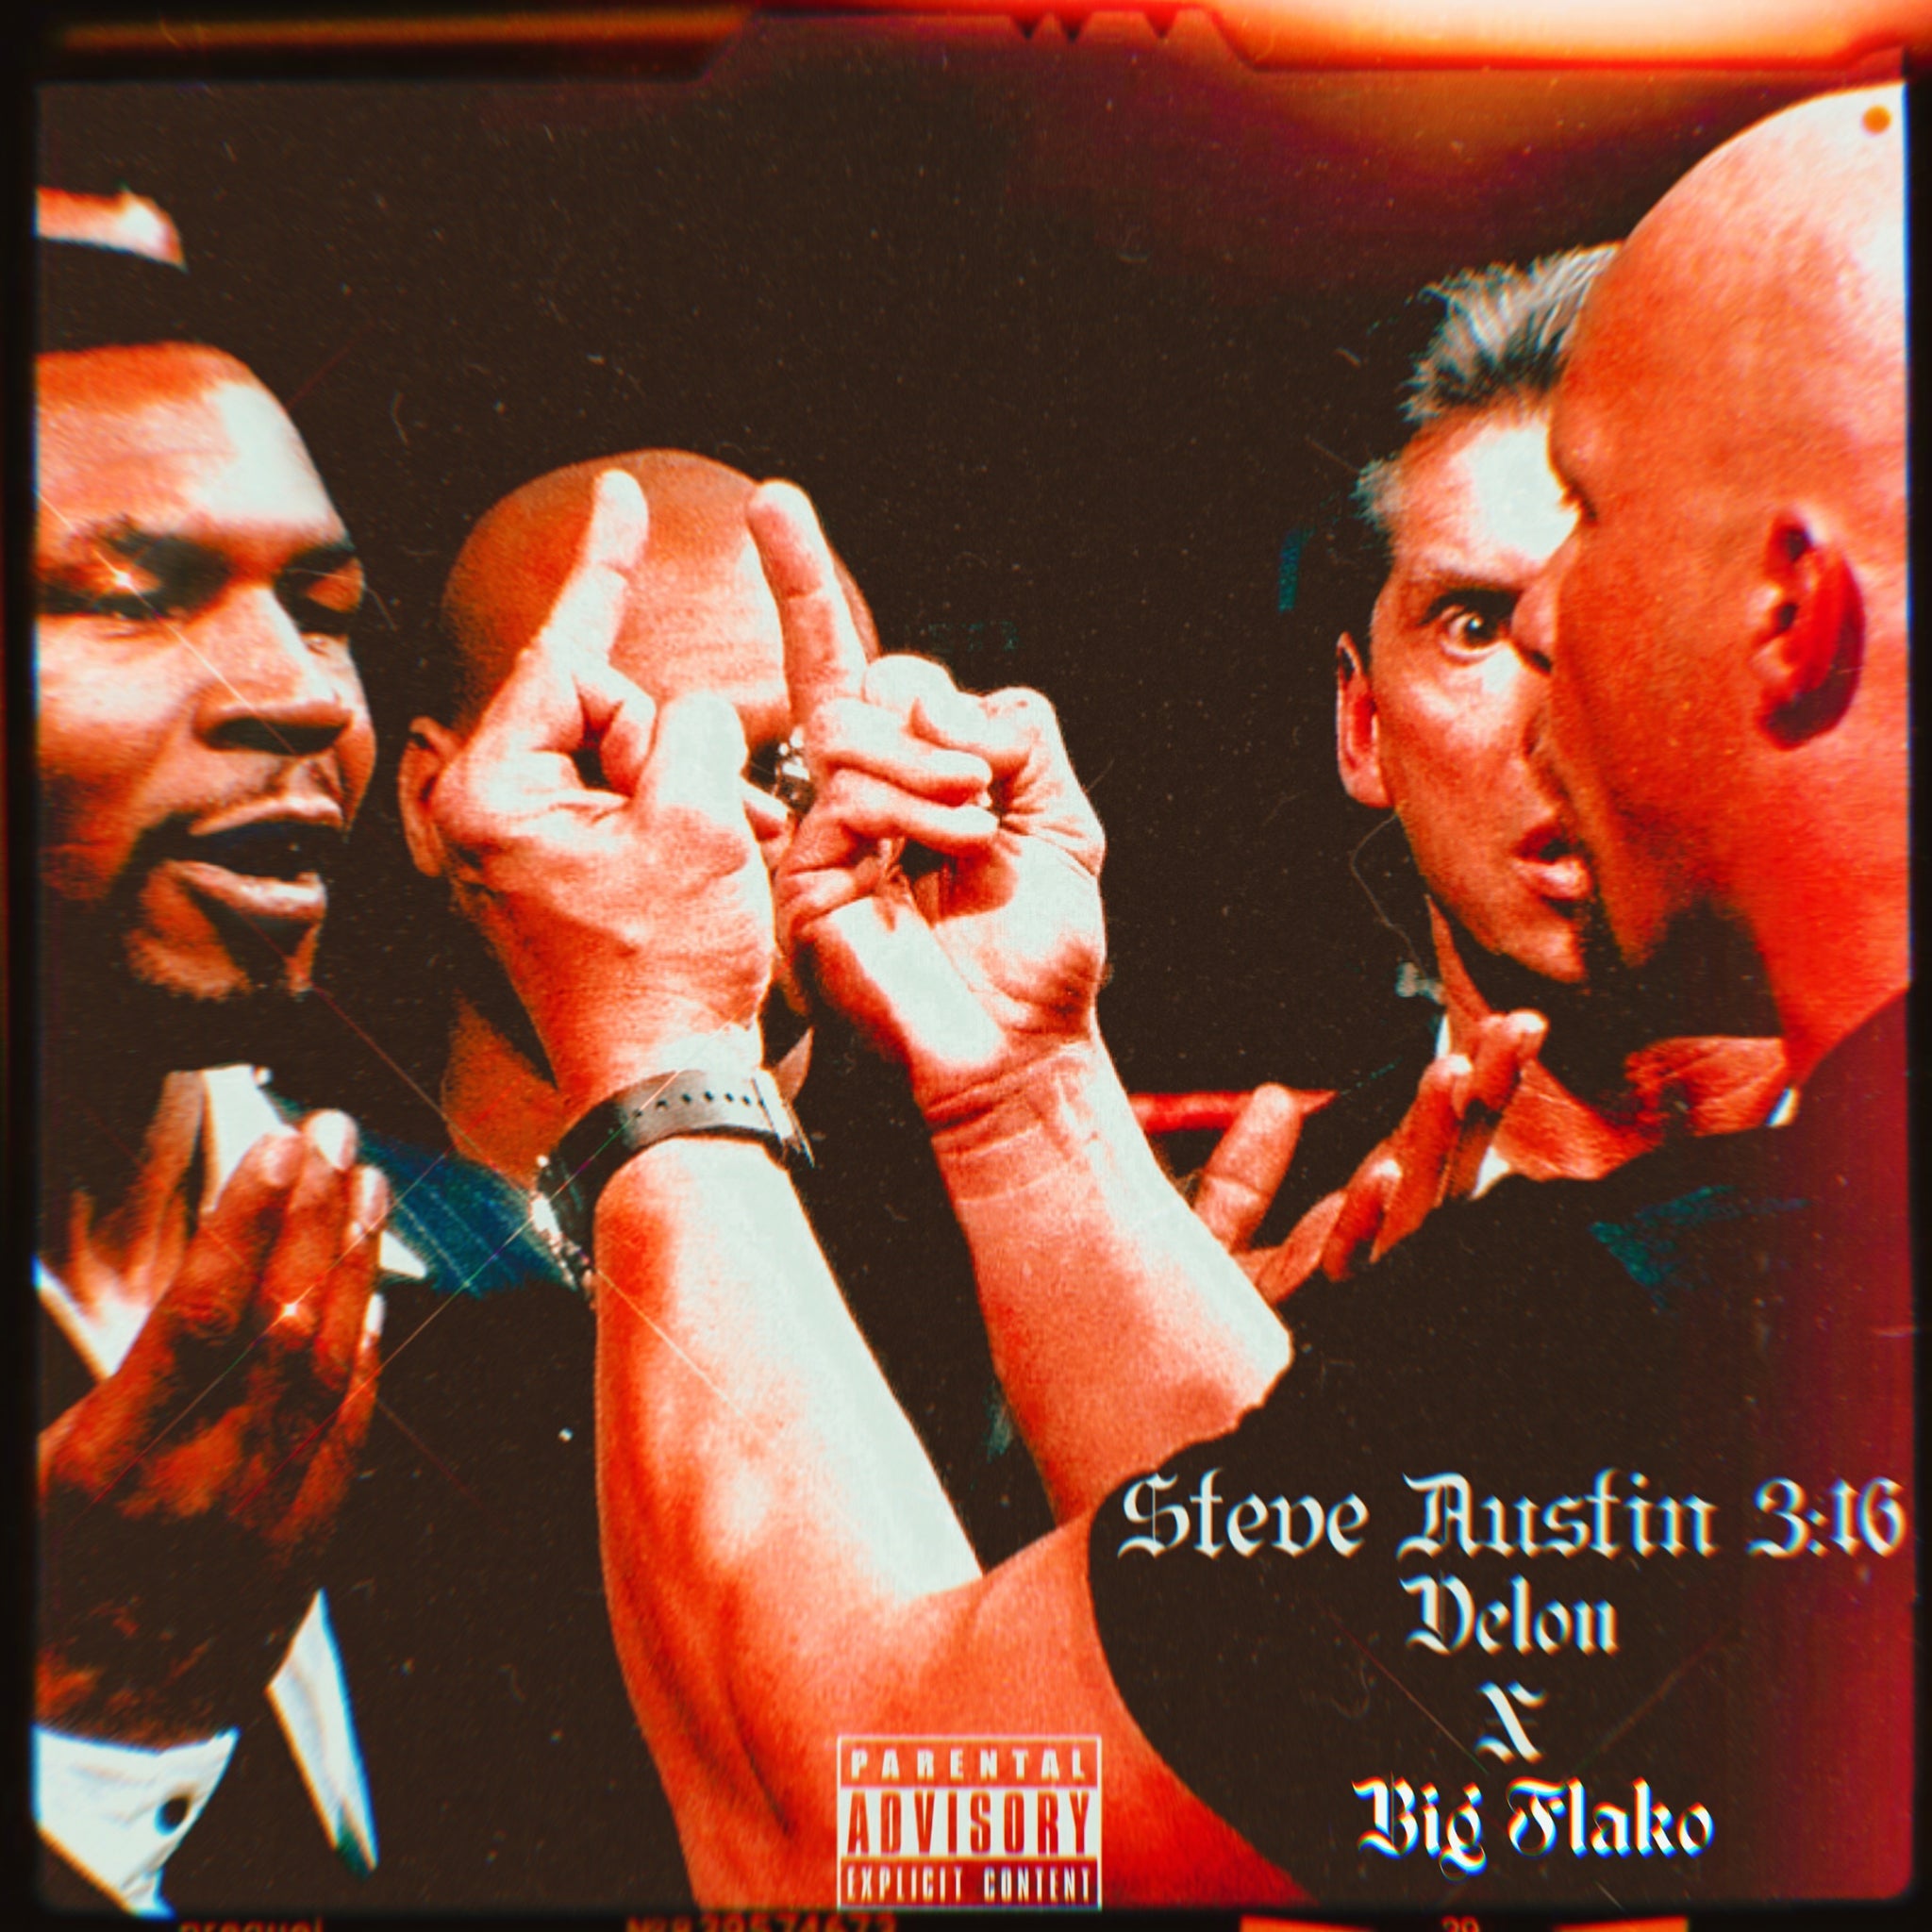 Steve Austin 3:16 by Delon ft Big Flako